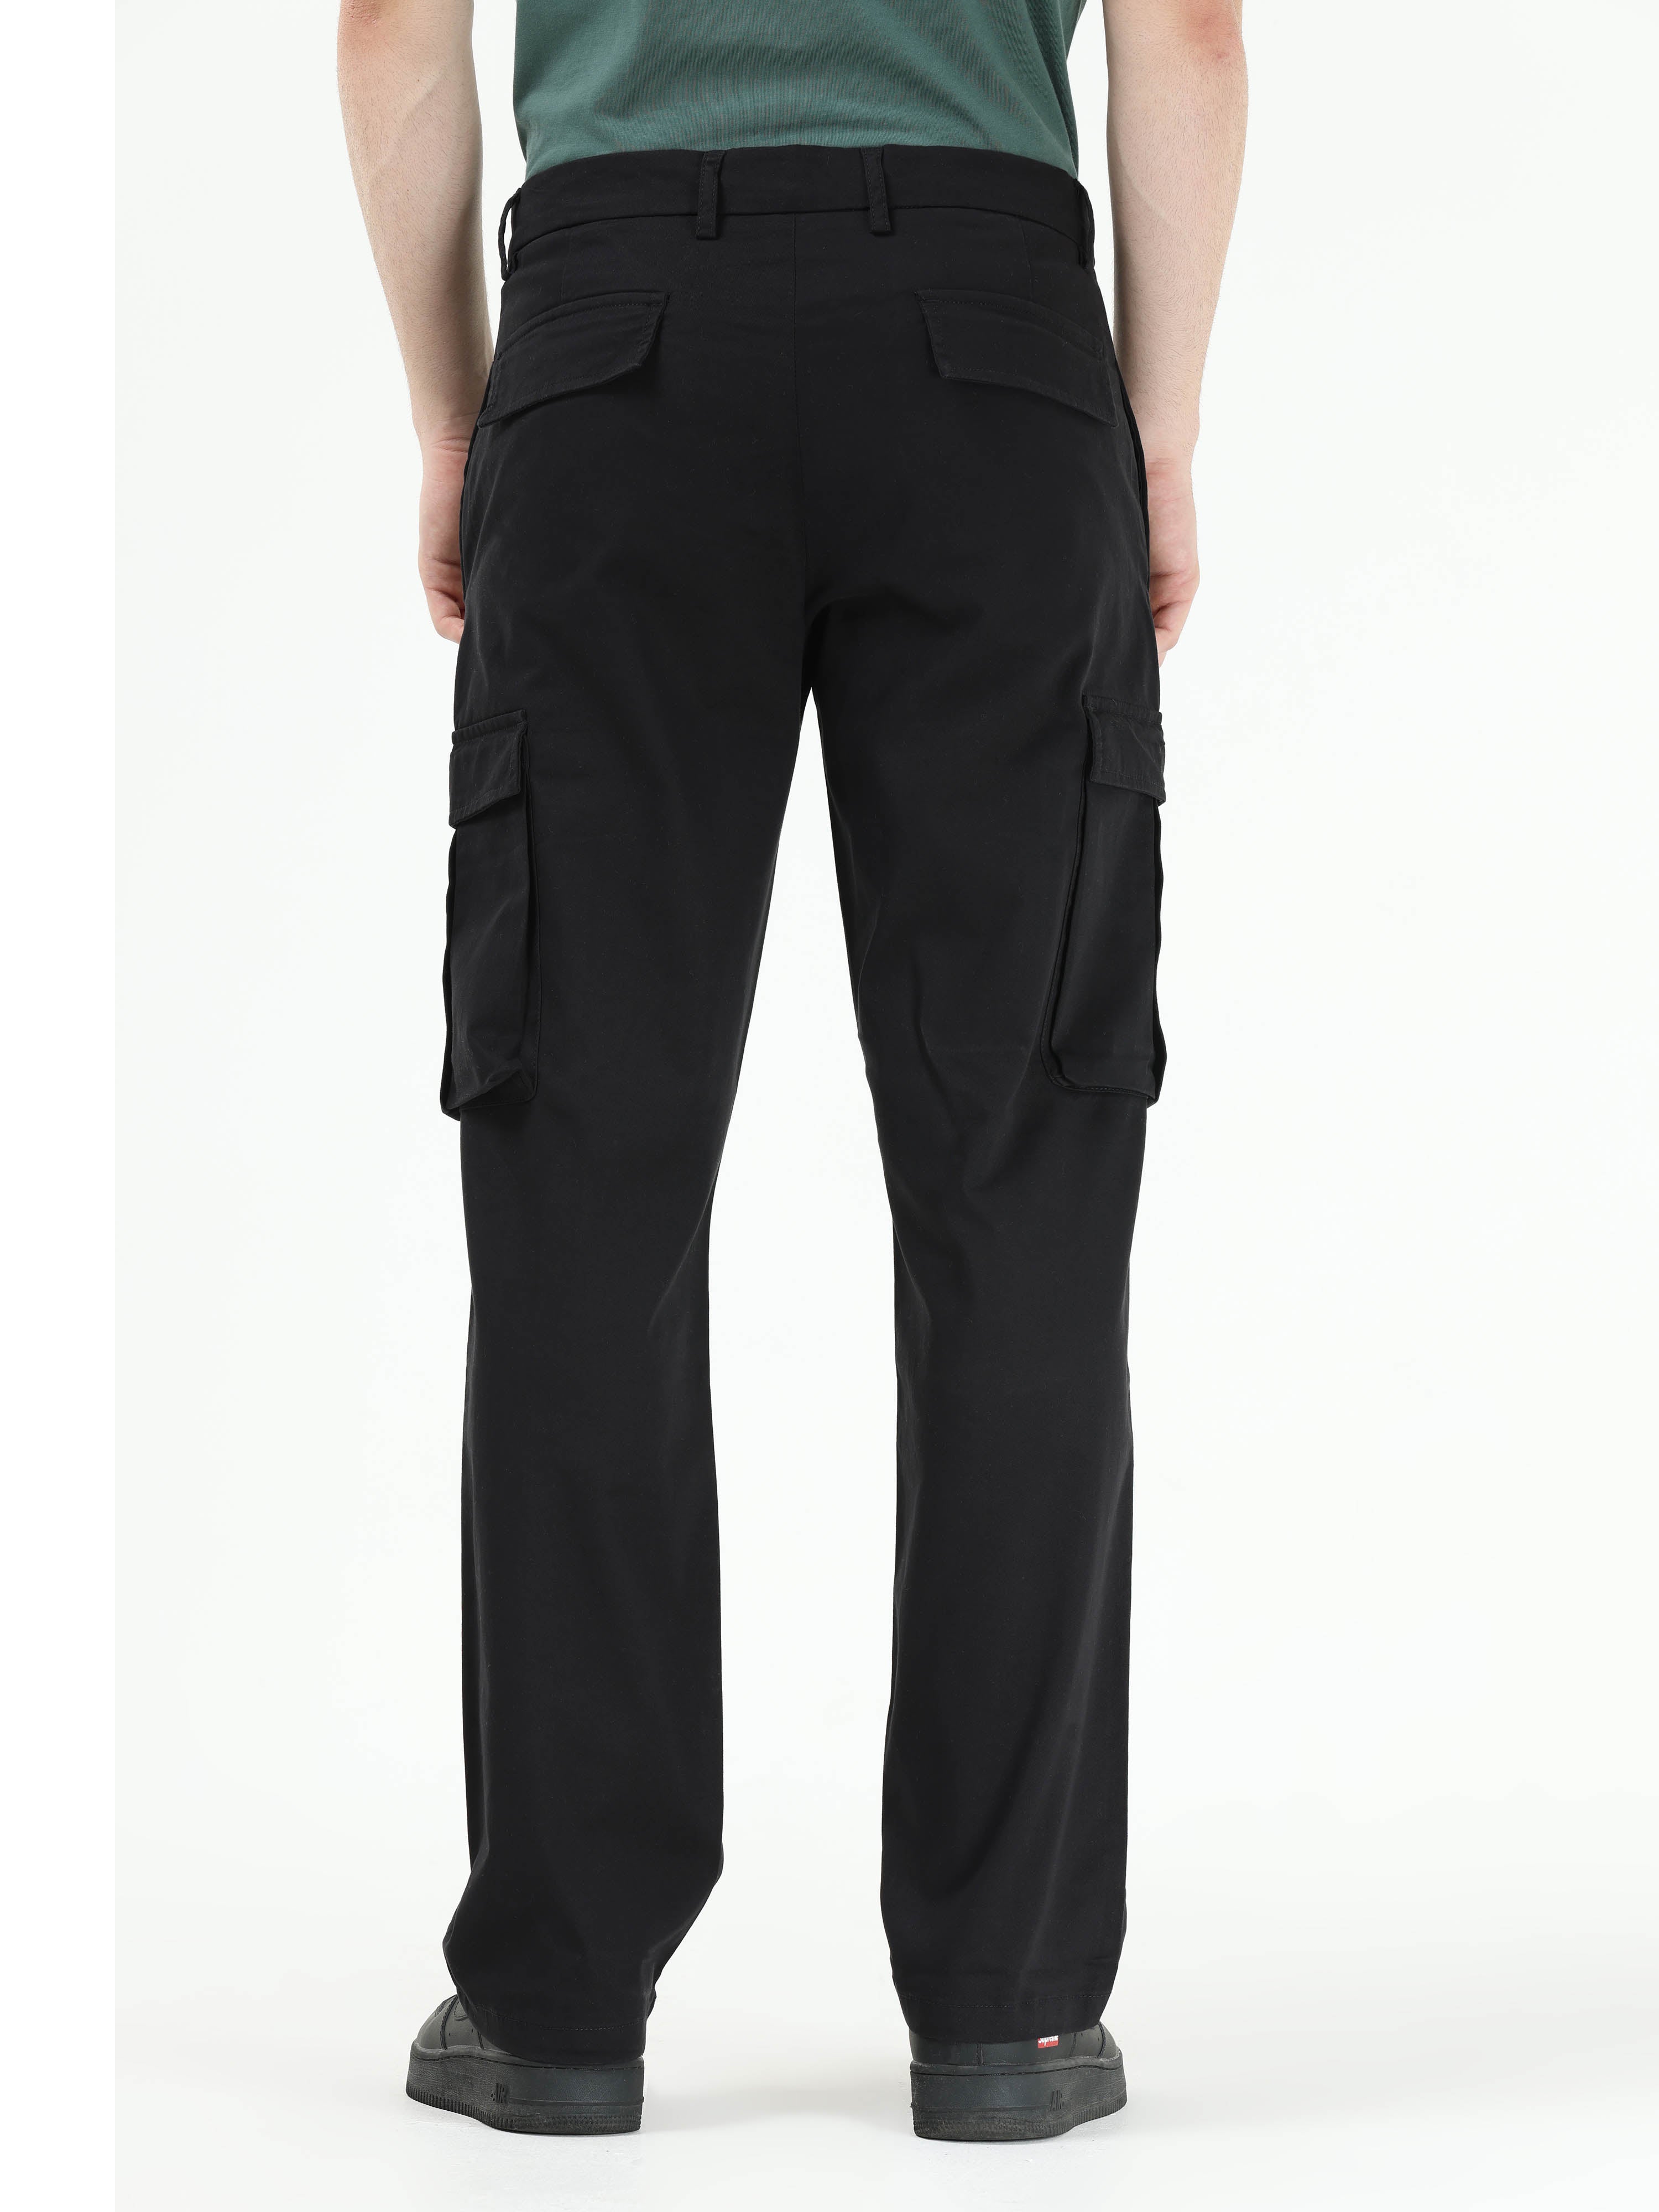 Men's Loose Fit Multiple Pocket White Denim Cargo Pant – Peplos Jeans